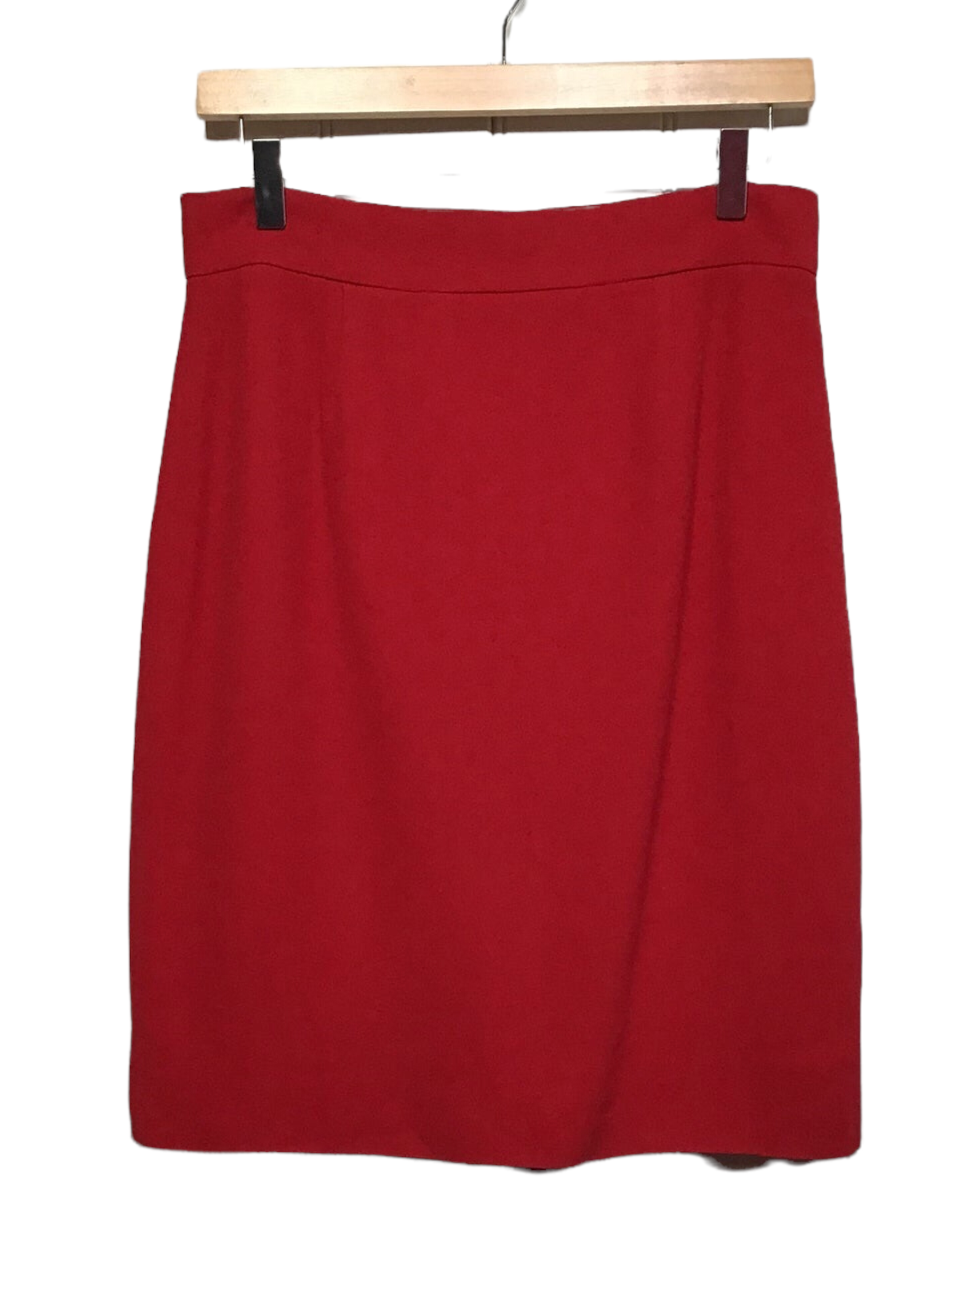 Moschino Pencil Skirt (Size M)